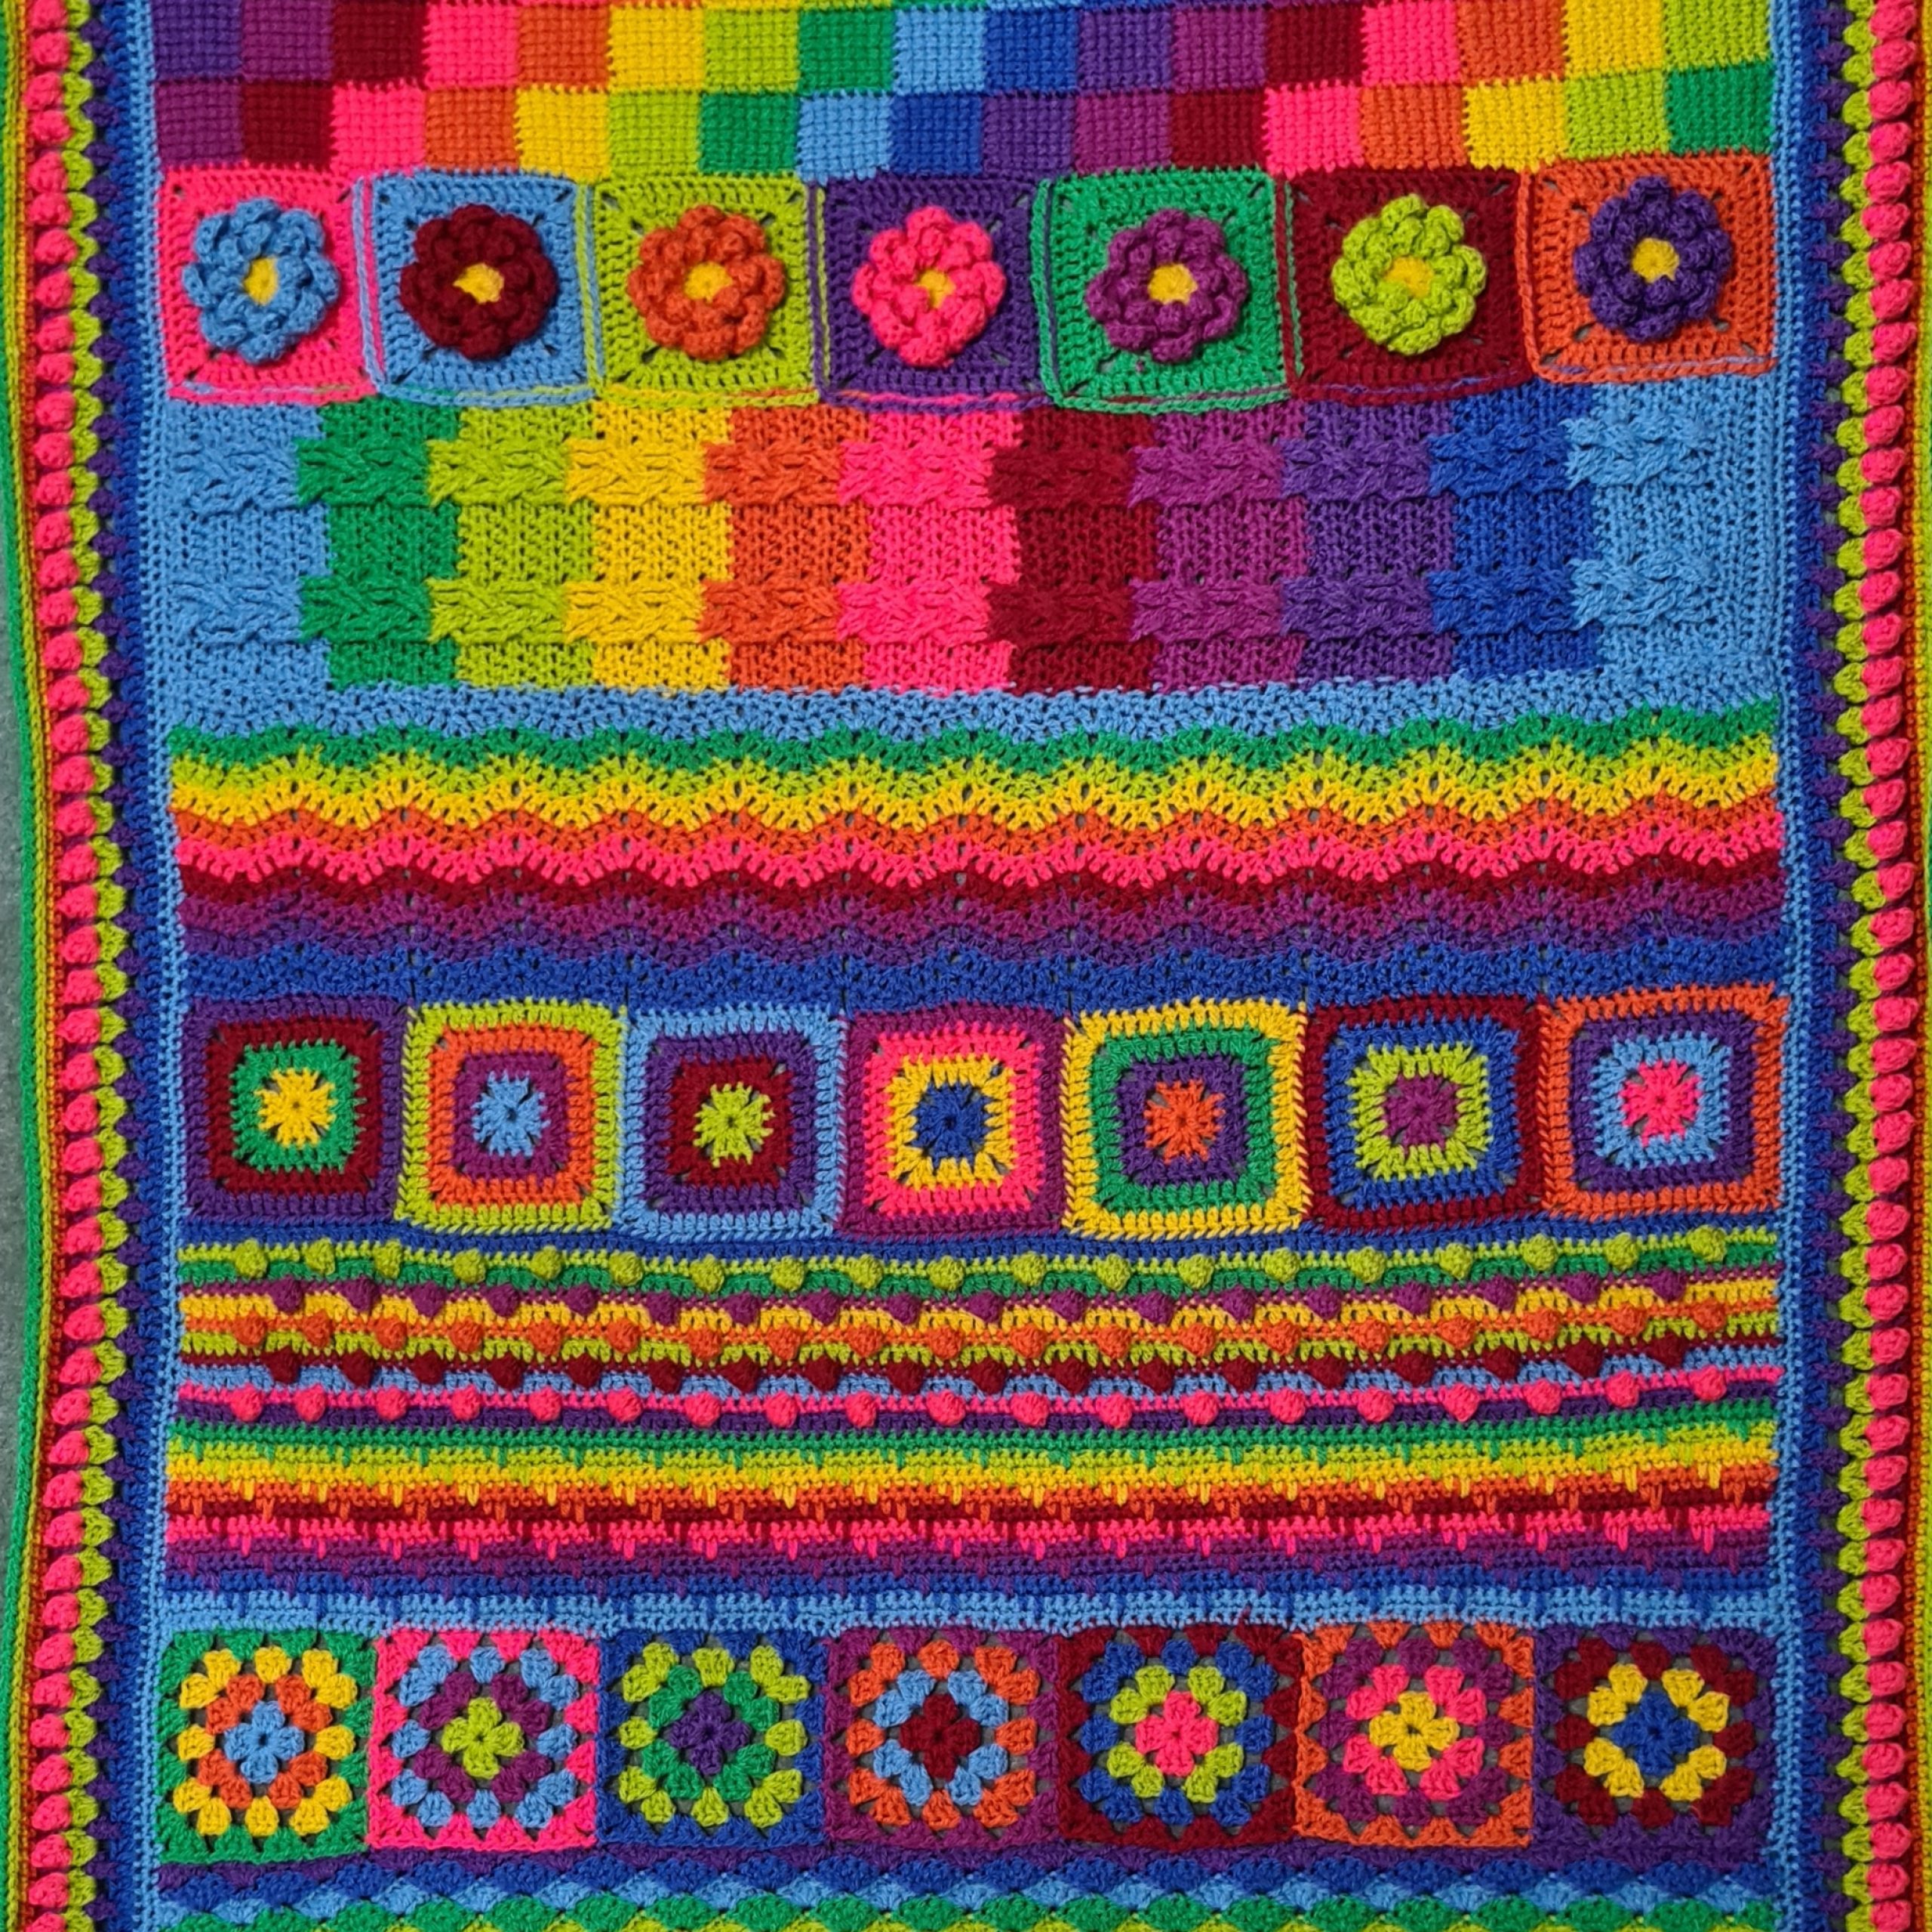 Diana Bensted - Crochet Masterclass complete blanket